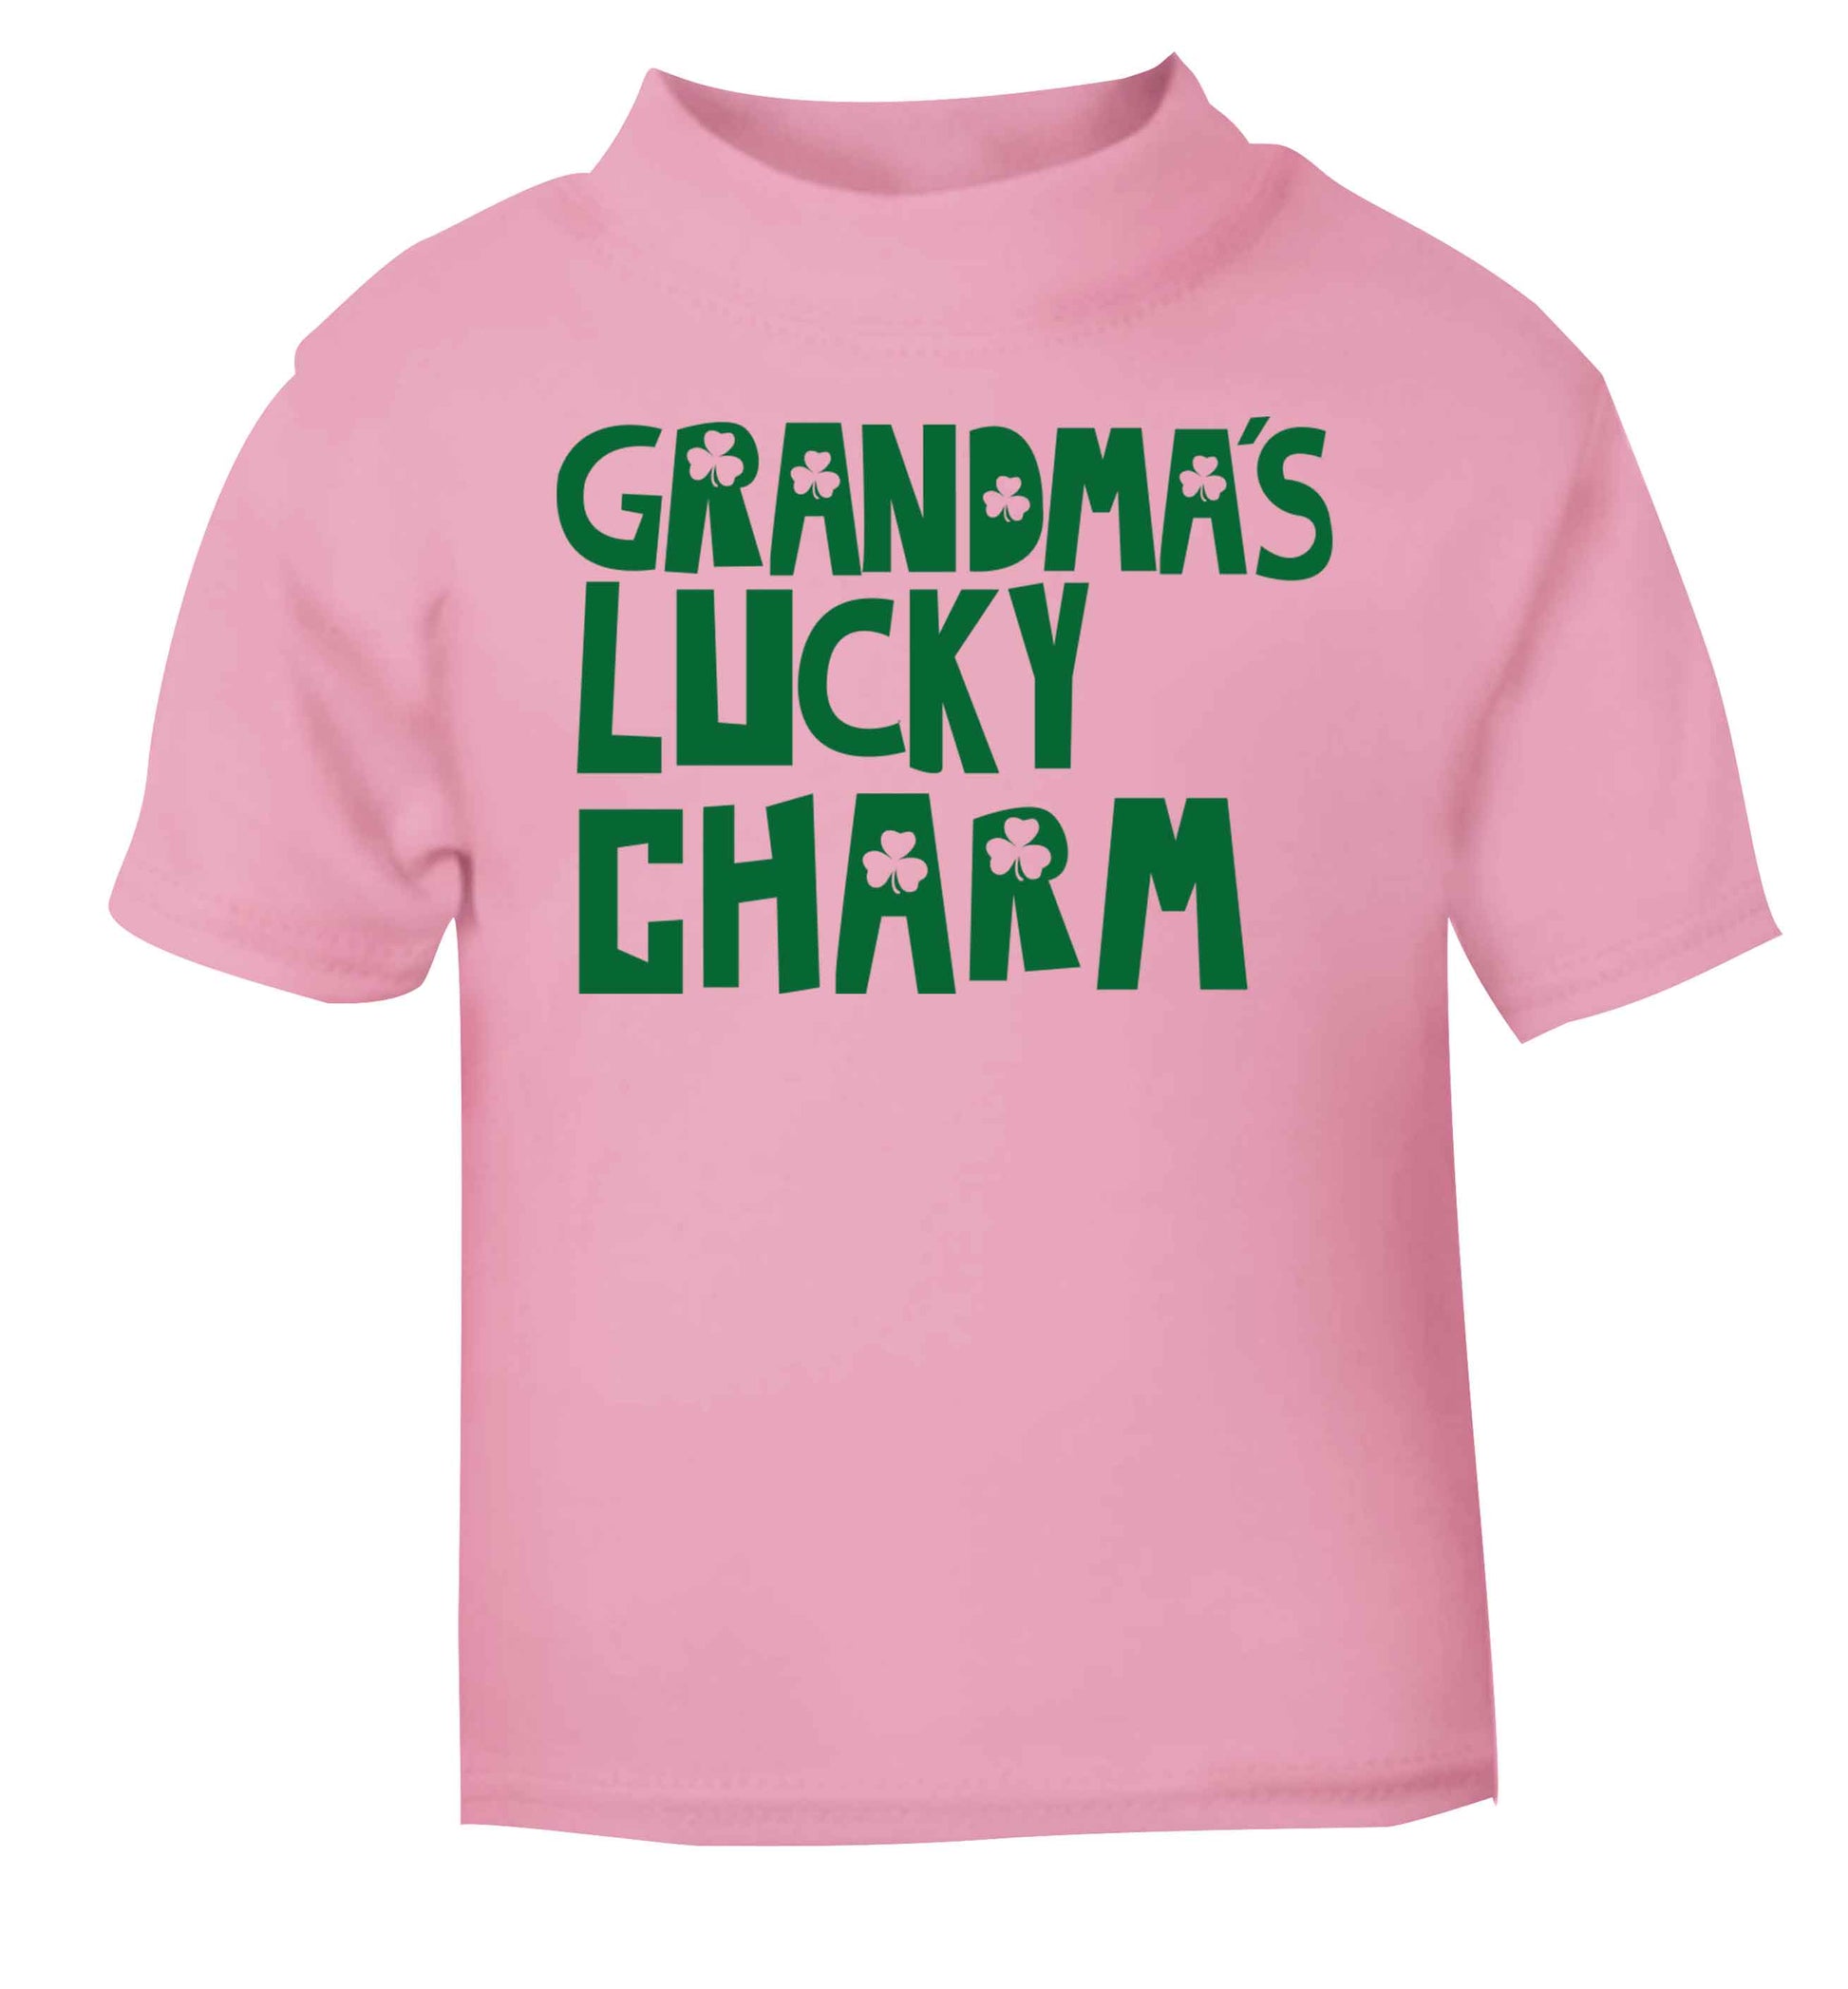 Grandma's lucky charm light pink baby toddler Tshirt 2 Years